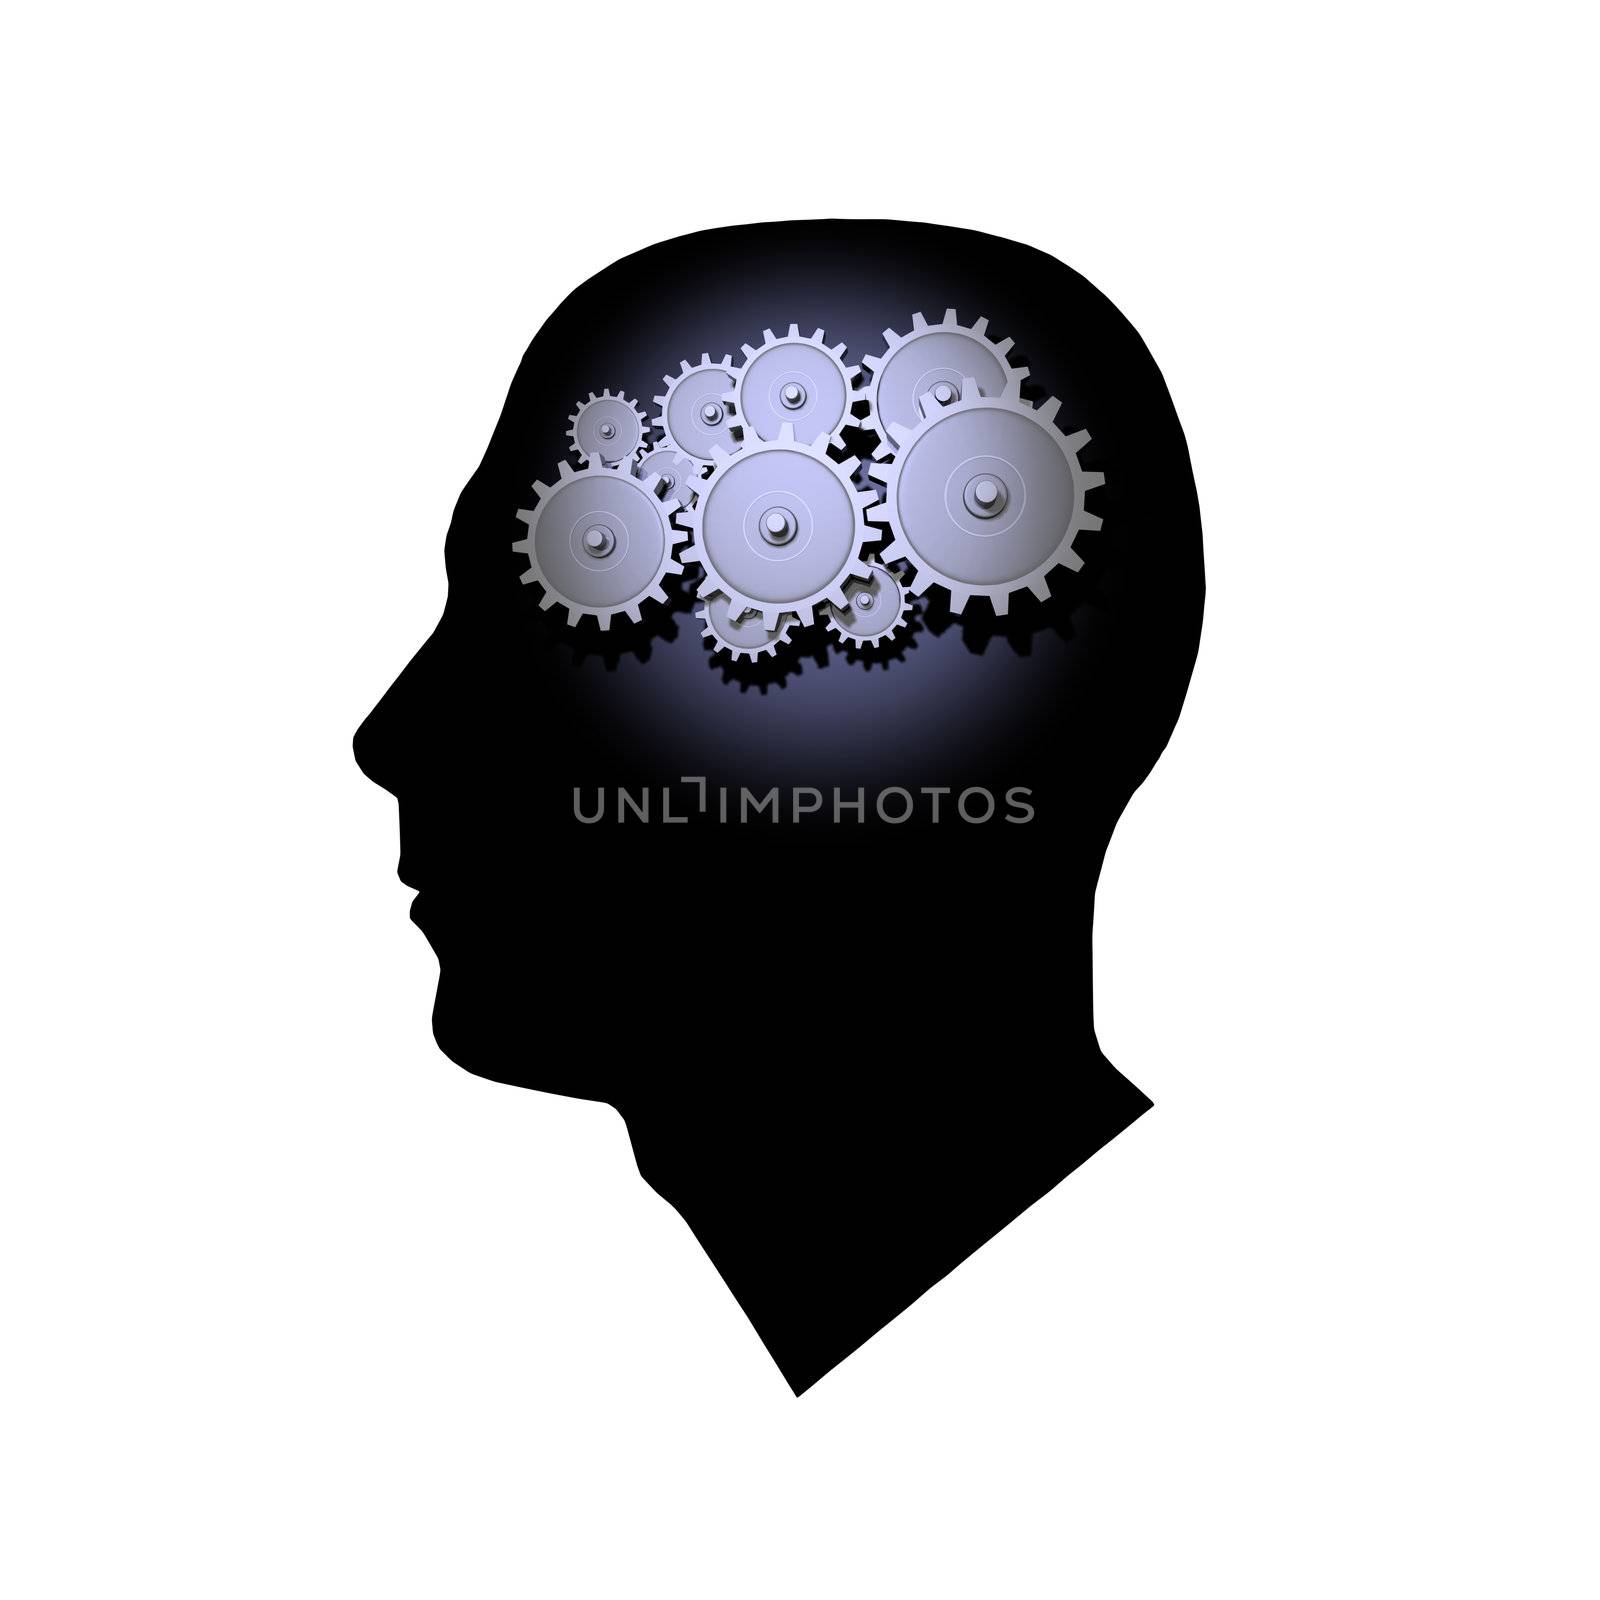 3D Gears inside the profile of a man's head.